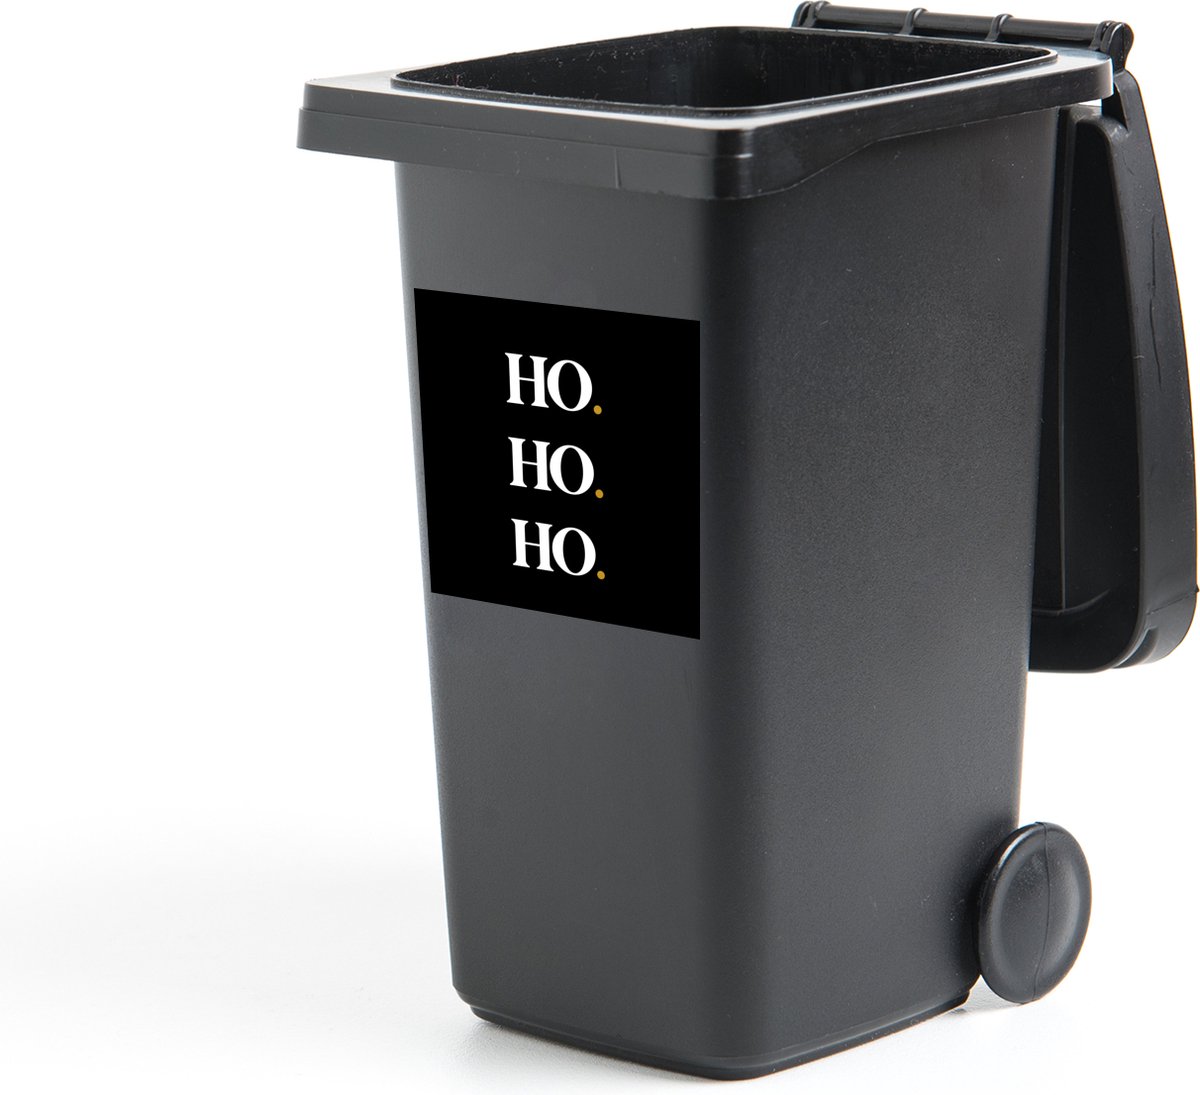 Afbeelding van product StickerSnake  Container sticker Ho ho ho - Kerstmis - Kerstman - Quotes - Spreuken - 40x40 cm - Kliko sticker